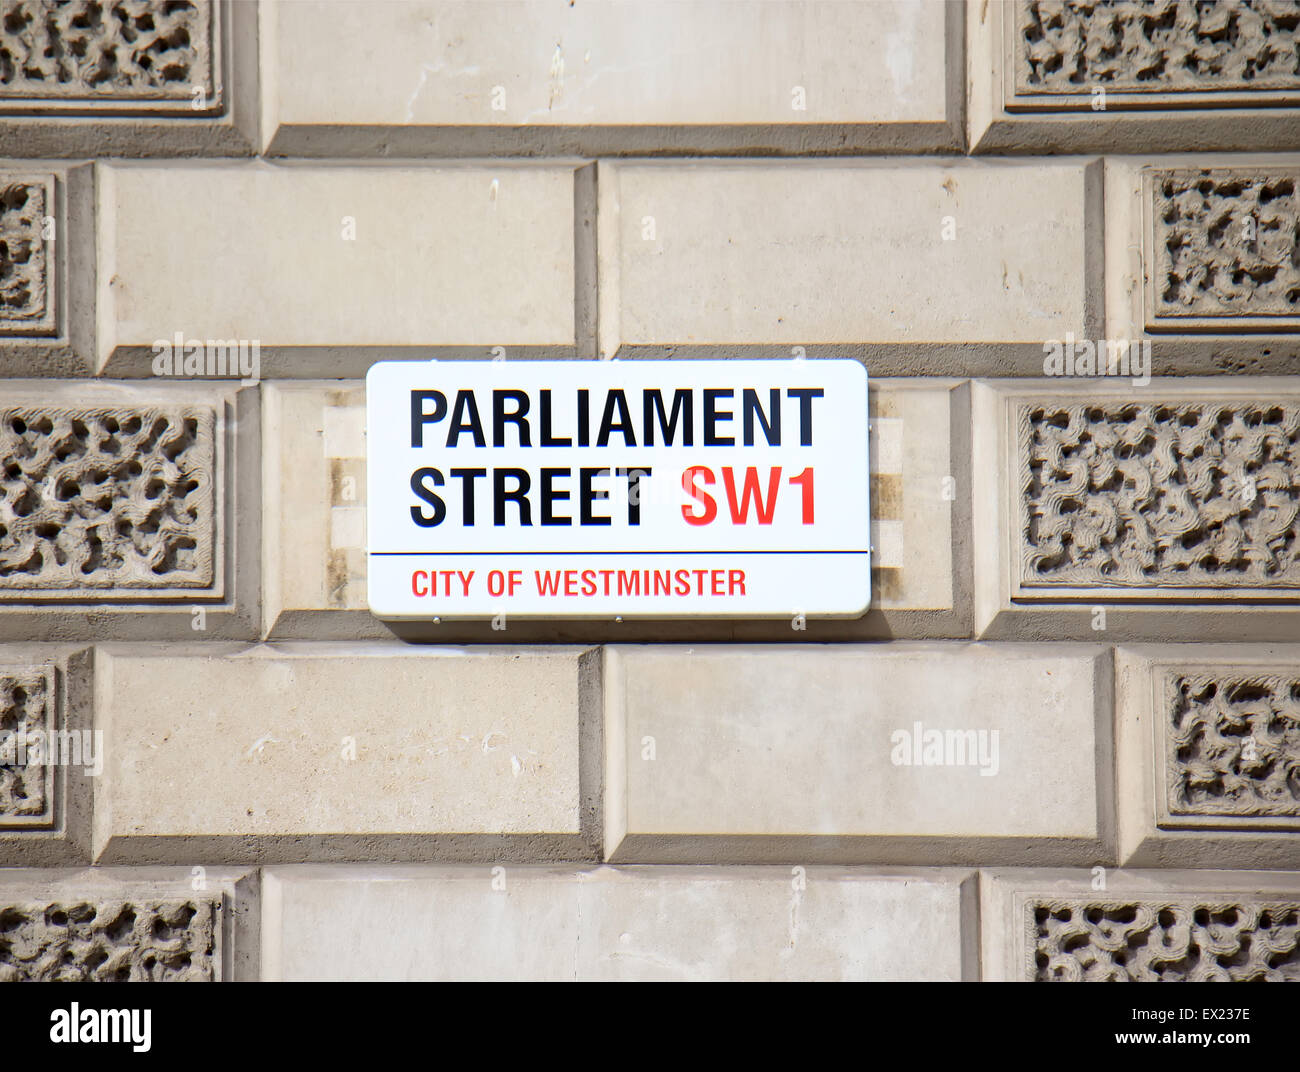 Parliament street sign Stock Photo